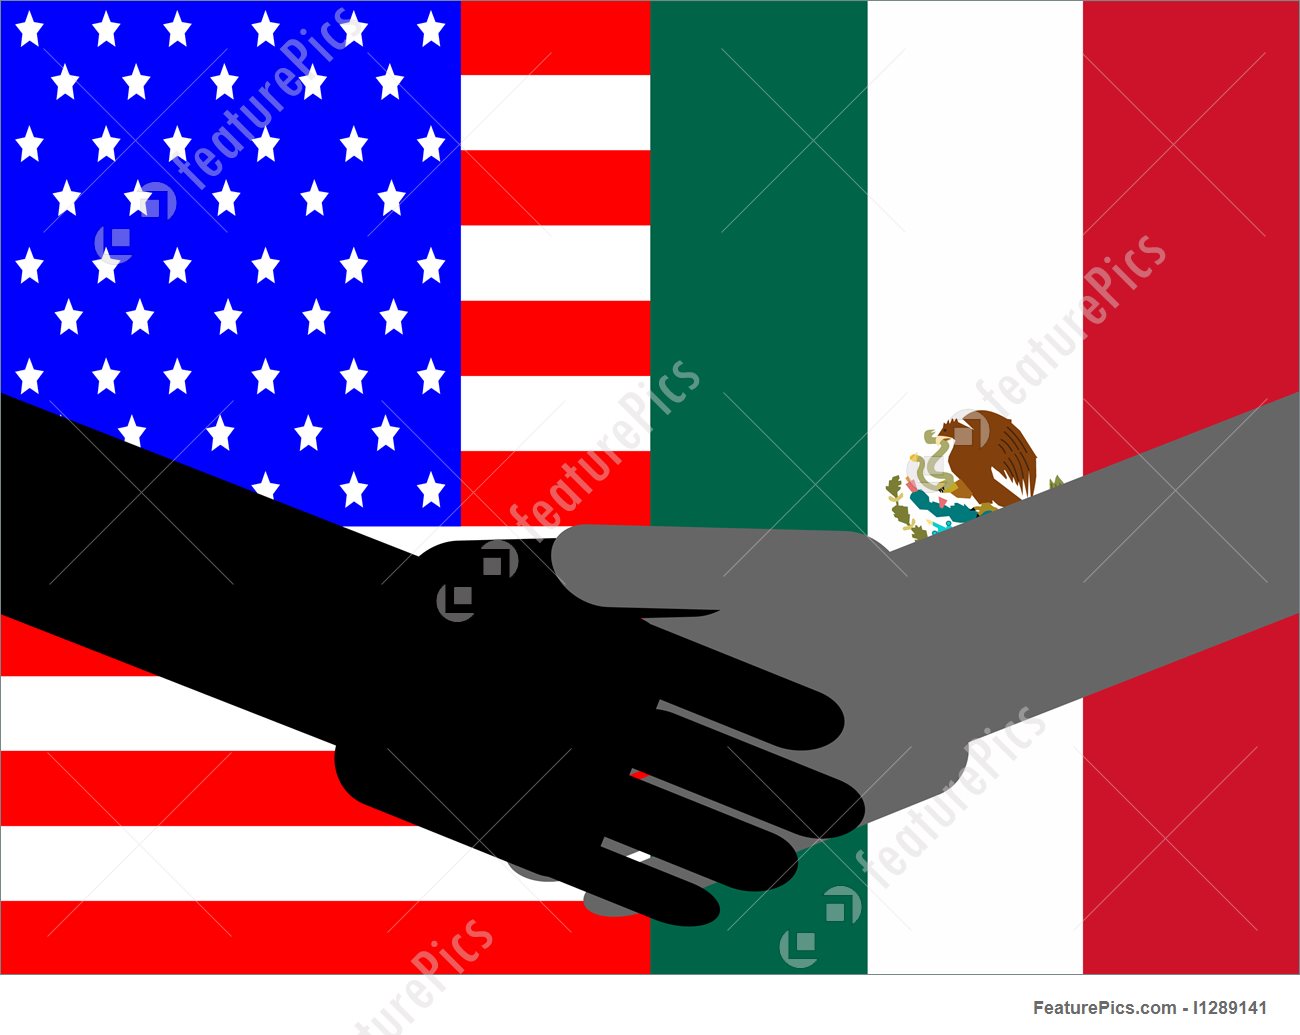 American Mexican Handshake Stock Illustration I1289141 at FeaturePics.